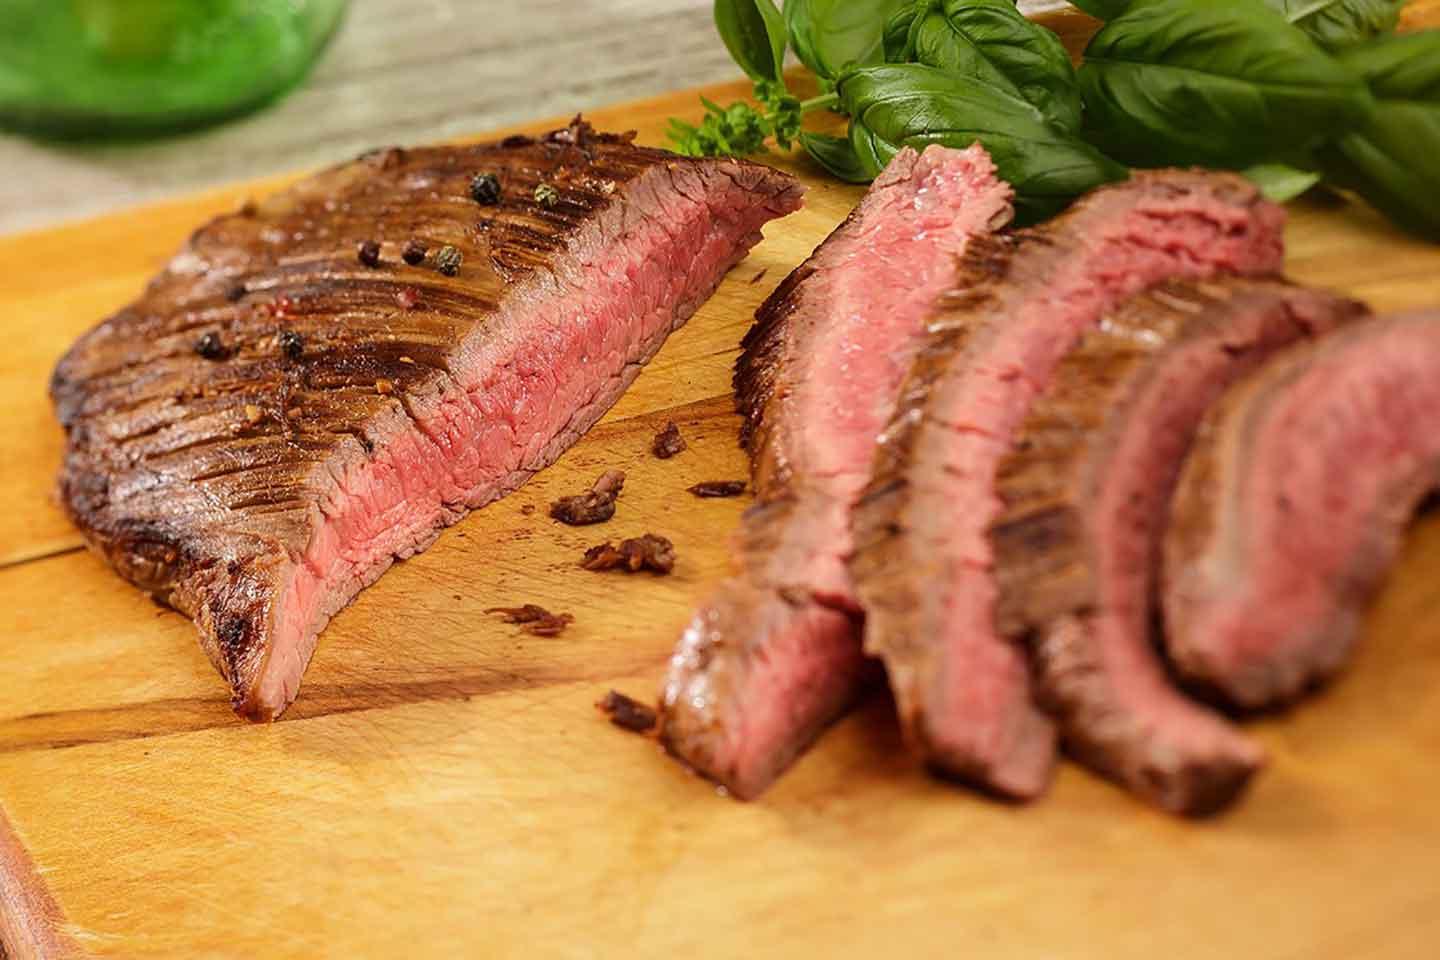 Flank Steak – Organic Prairie